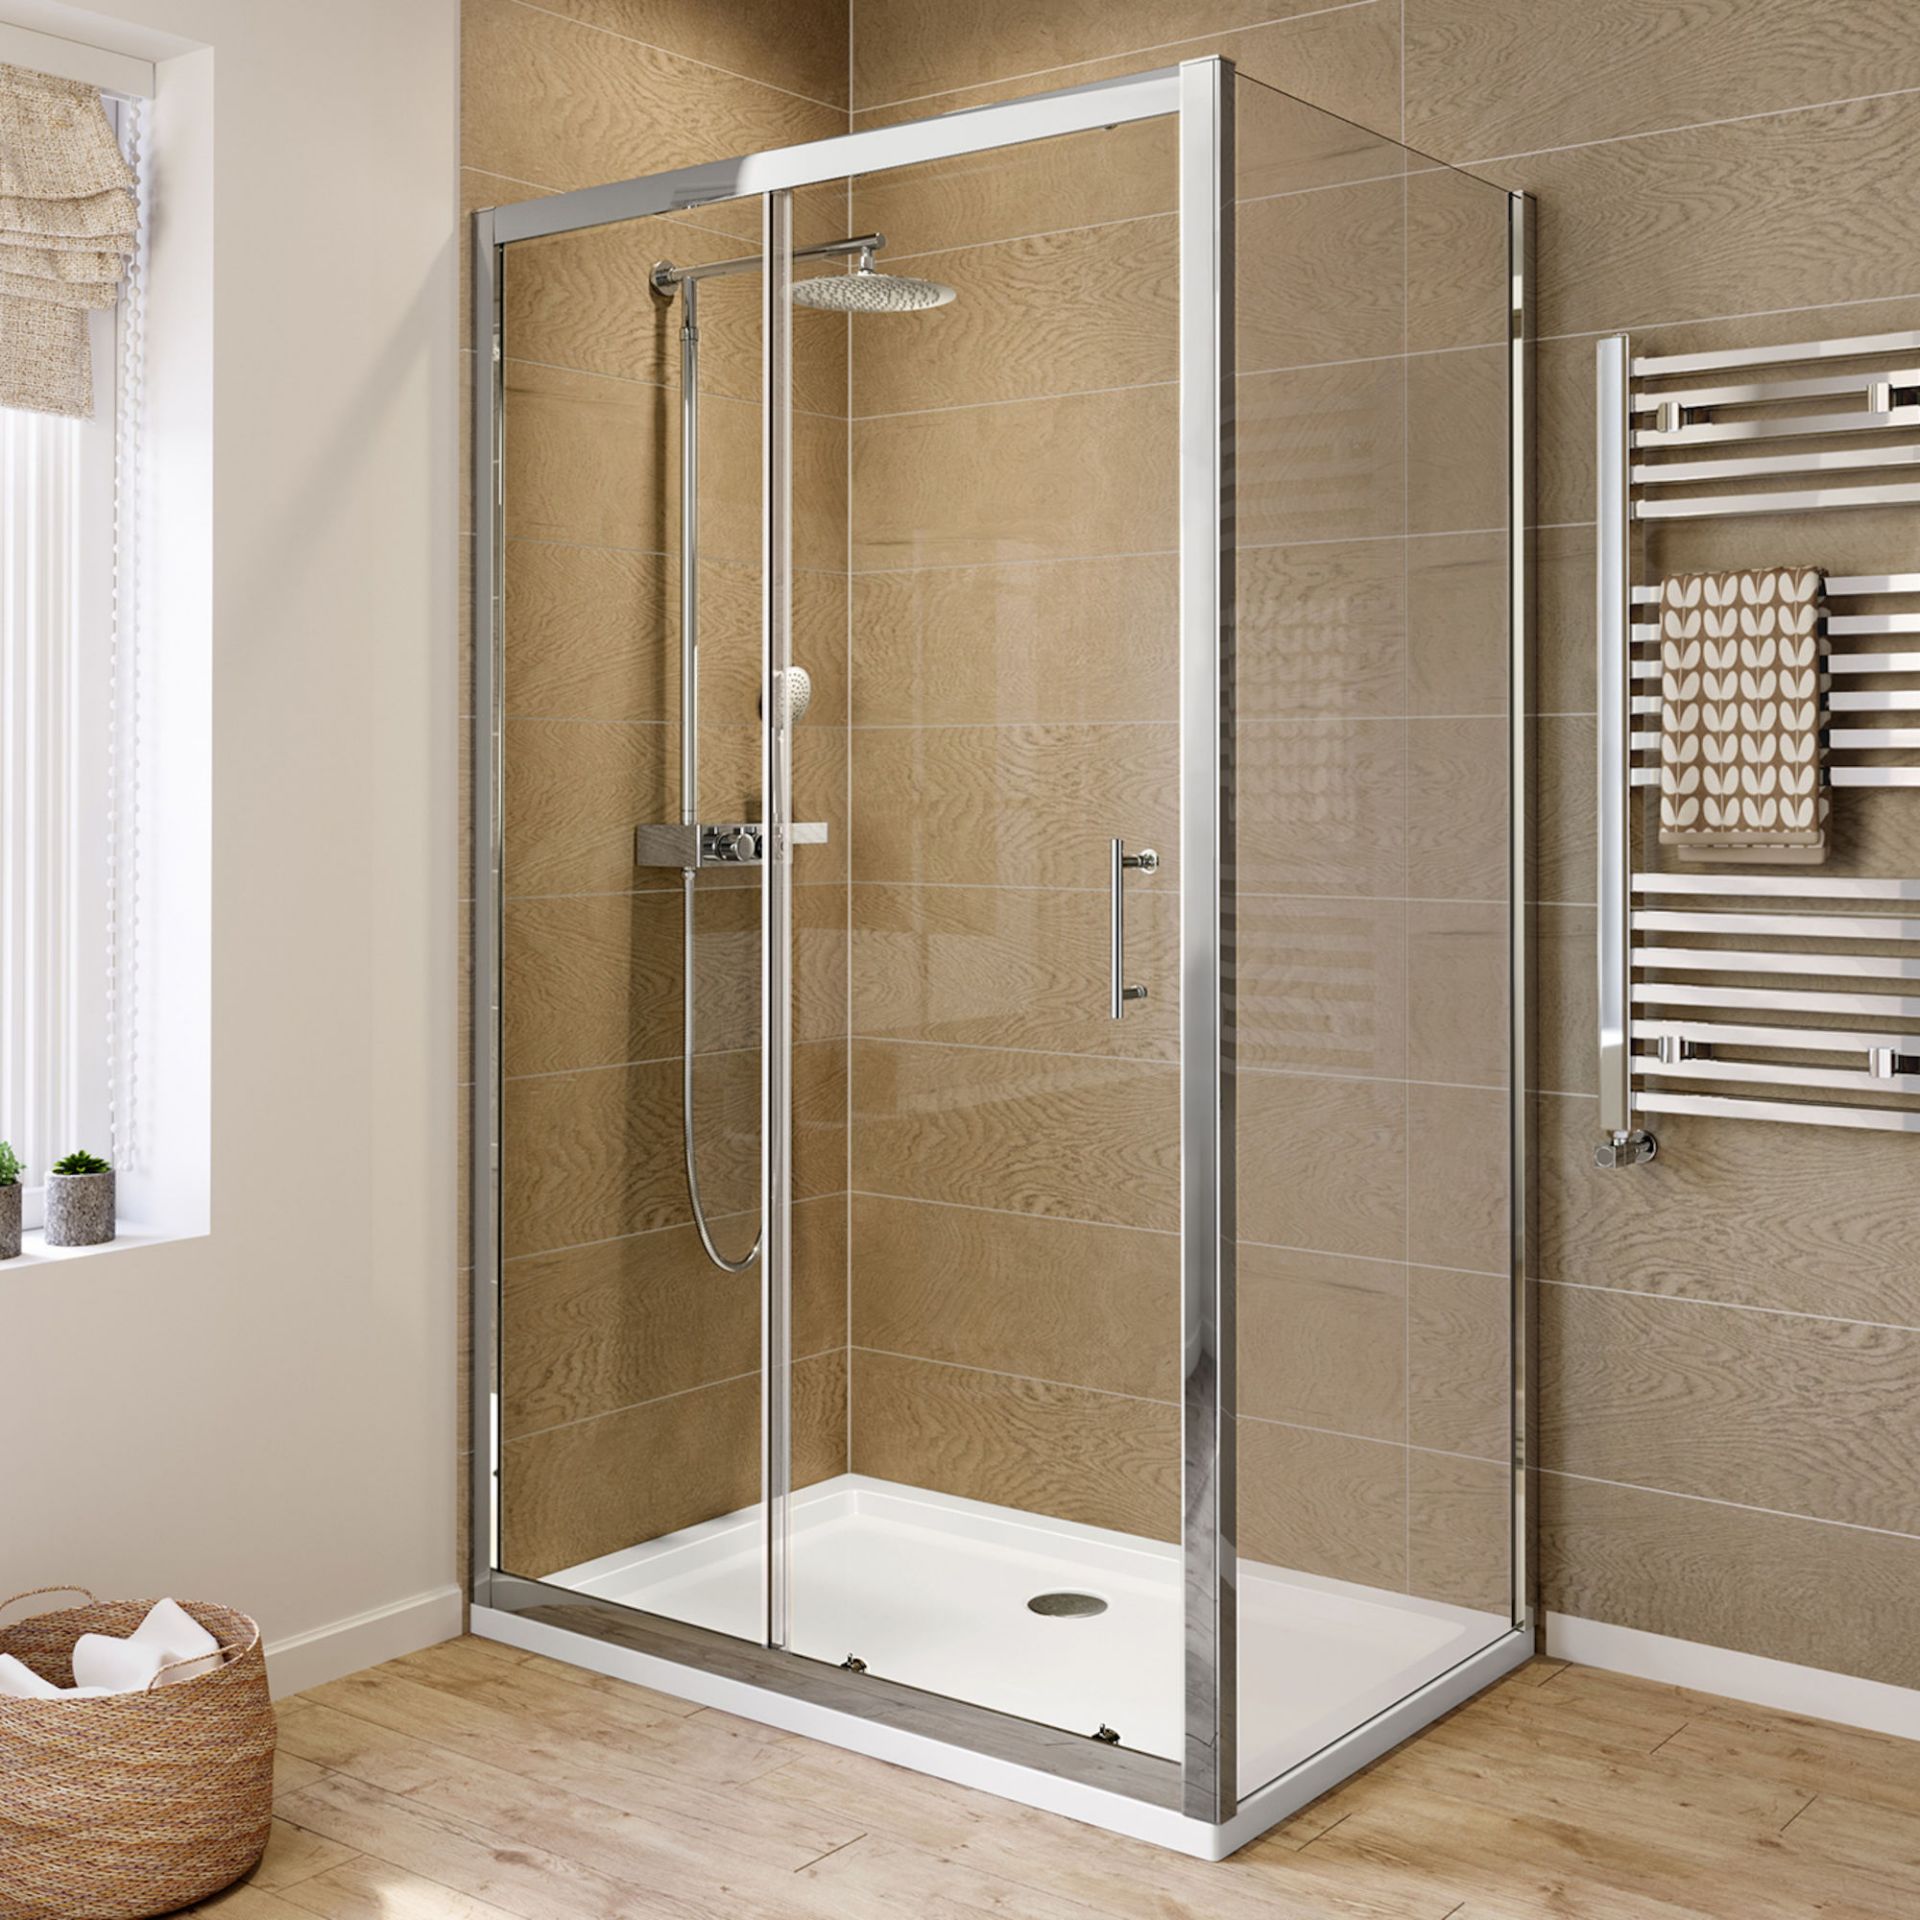 New Twyfords 1200x900mm - 6mm - Elements Sliding Door Shower Enclosure. RRP £363.99. G68503C1+... - Image 4 of 4